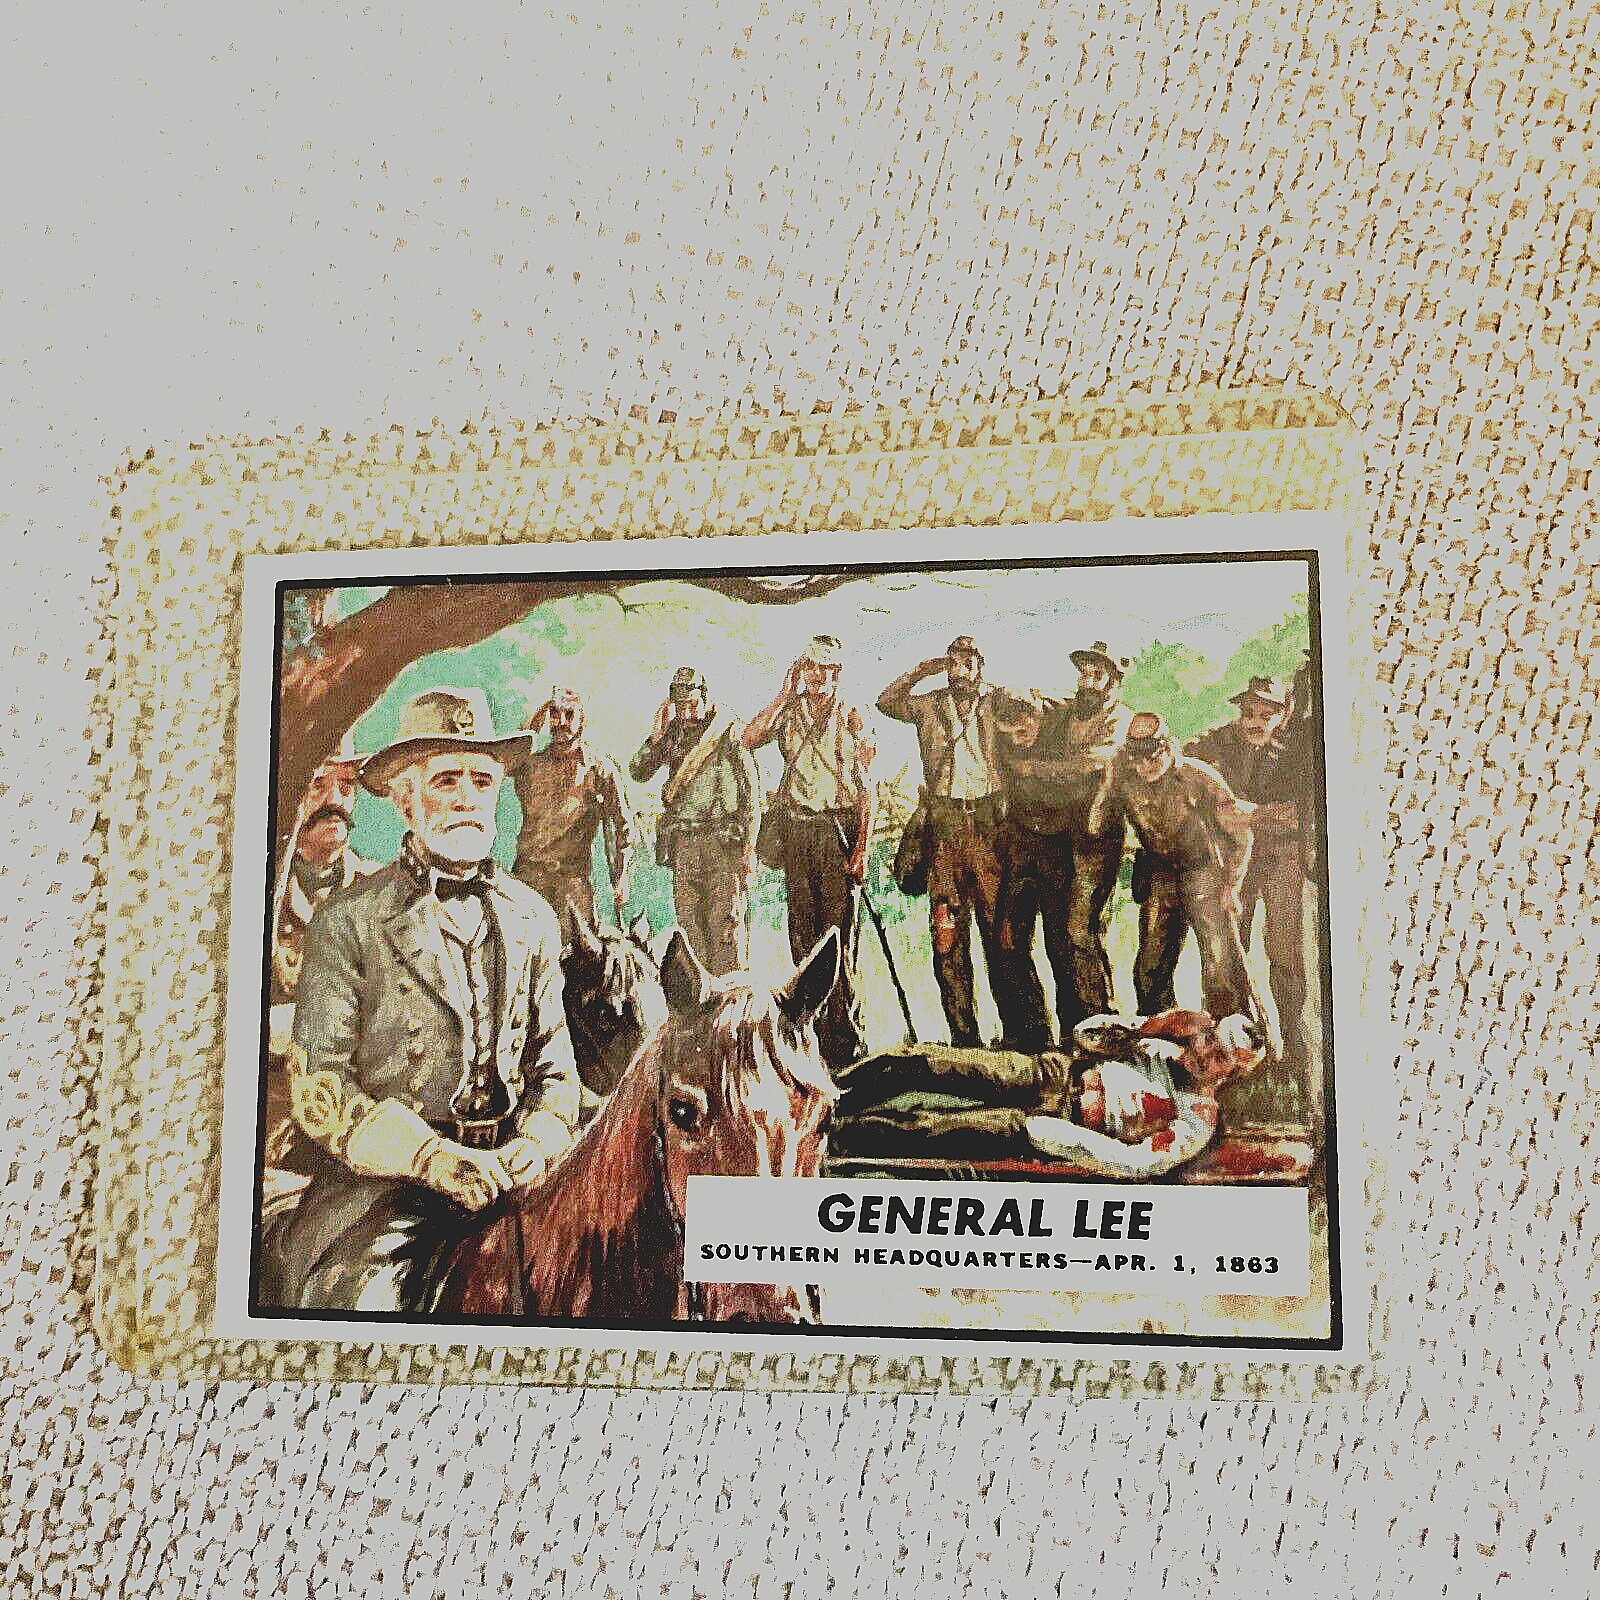 TOPPS 1962 CIVIL WAR NEWS CARD#39:GENERAL LEE SOUTHERN HEADQUARTERS APRIL 1,1863